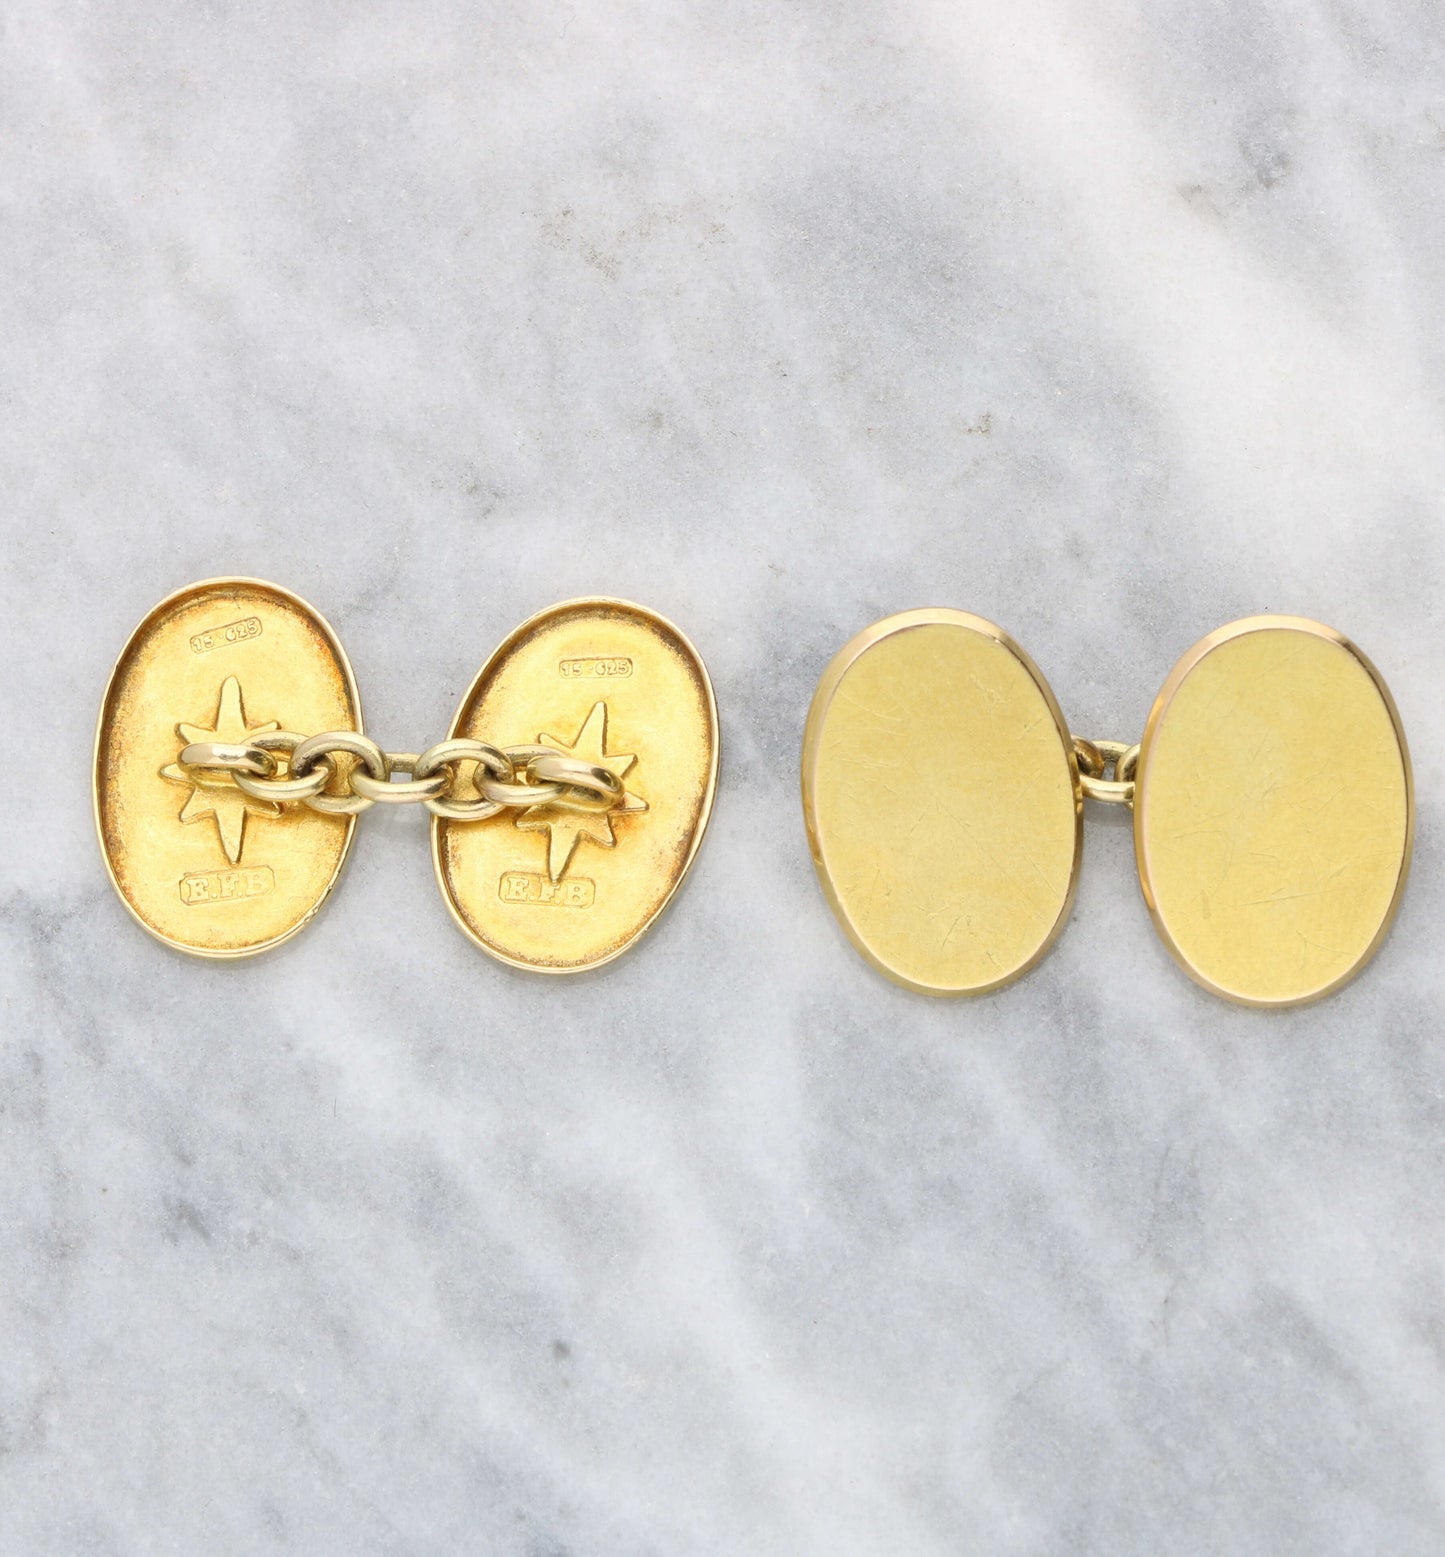 Antique 1896 15ct gold oval cufflinks